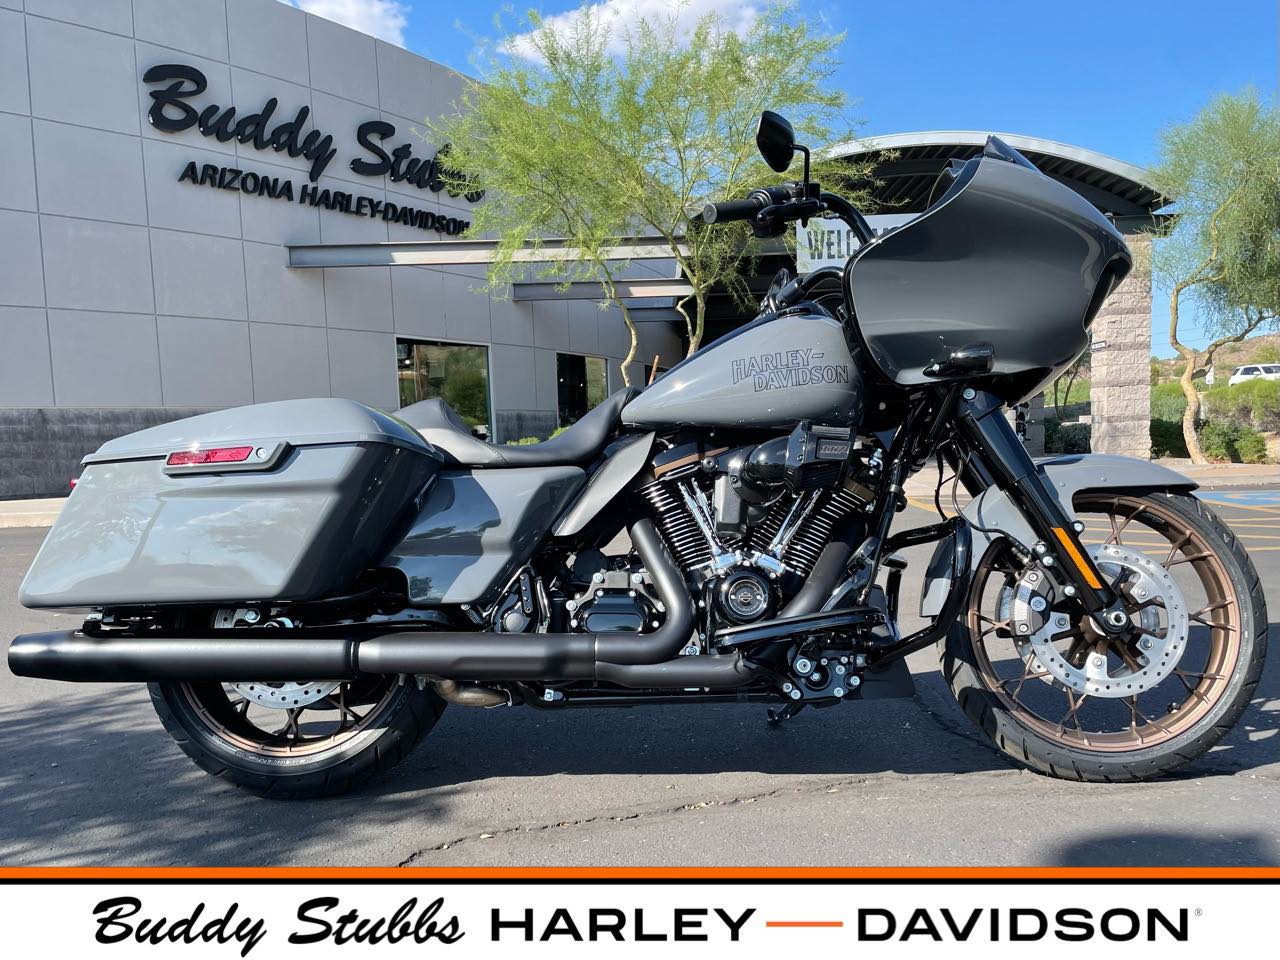 2022 Harley-Davidson Road Glide ST Road Glide ST at Buddy Stubbs Arizona Harley-Davidson